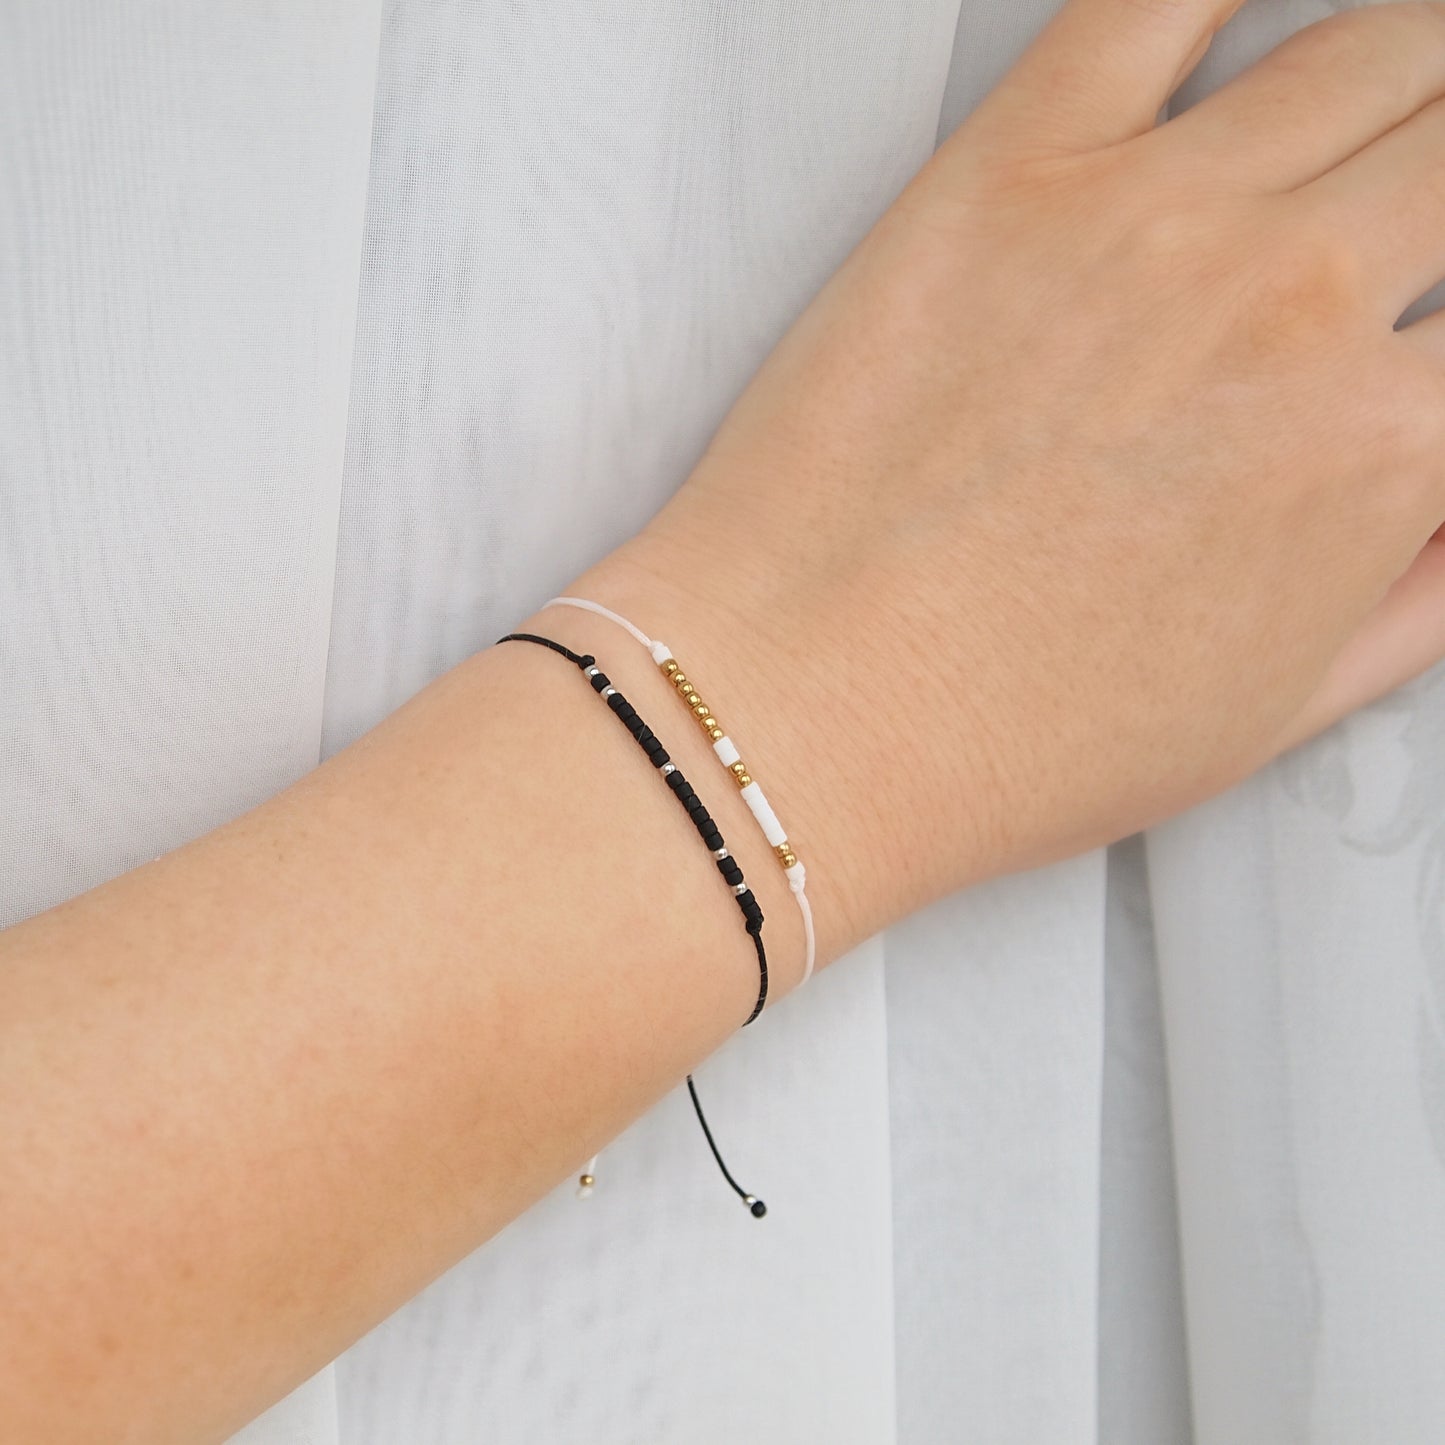 secret message bracelets for couples, anniversary gift